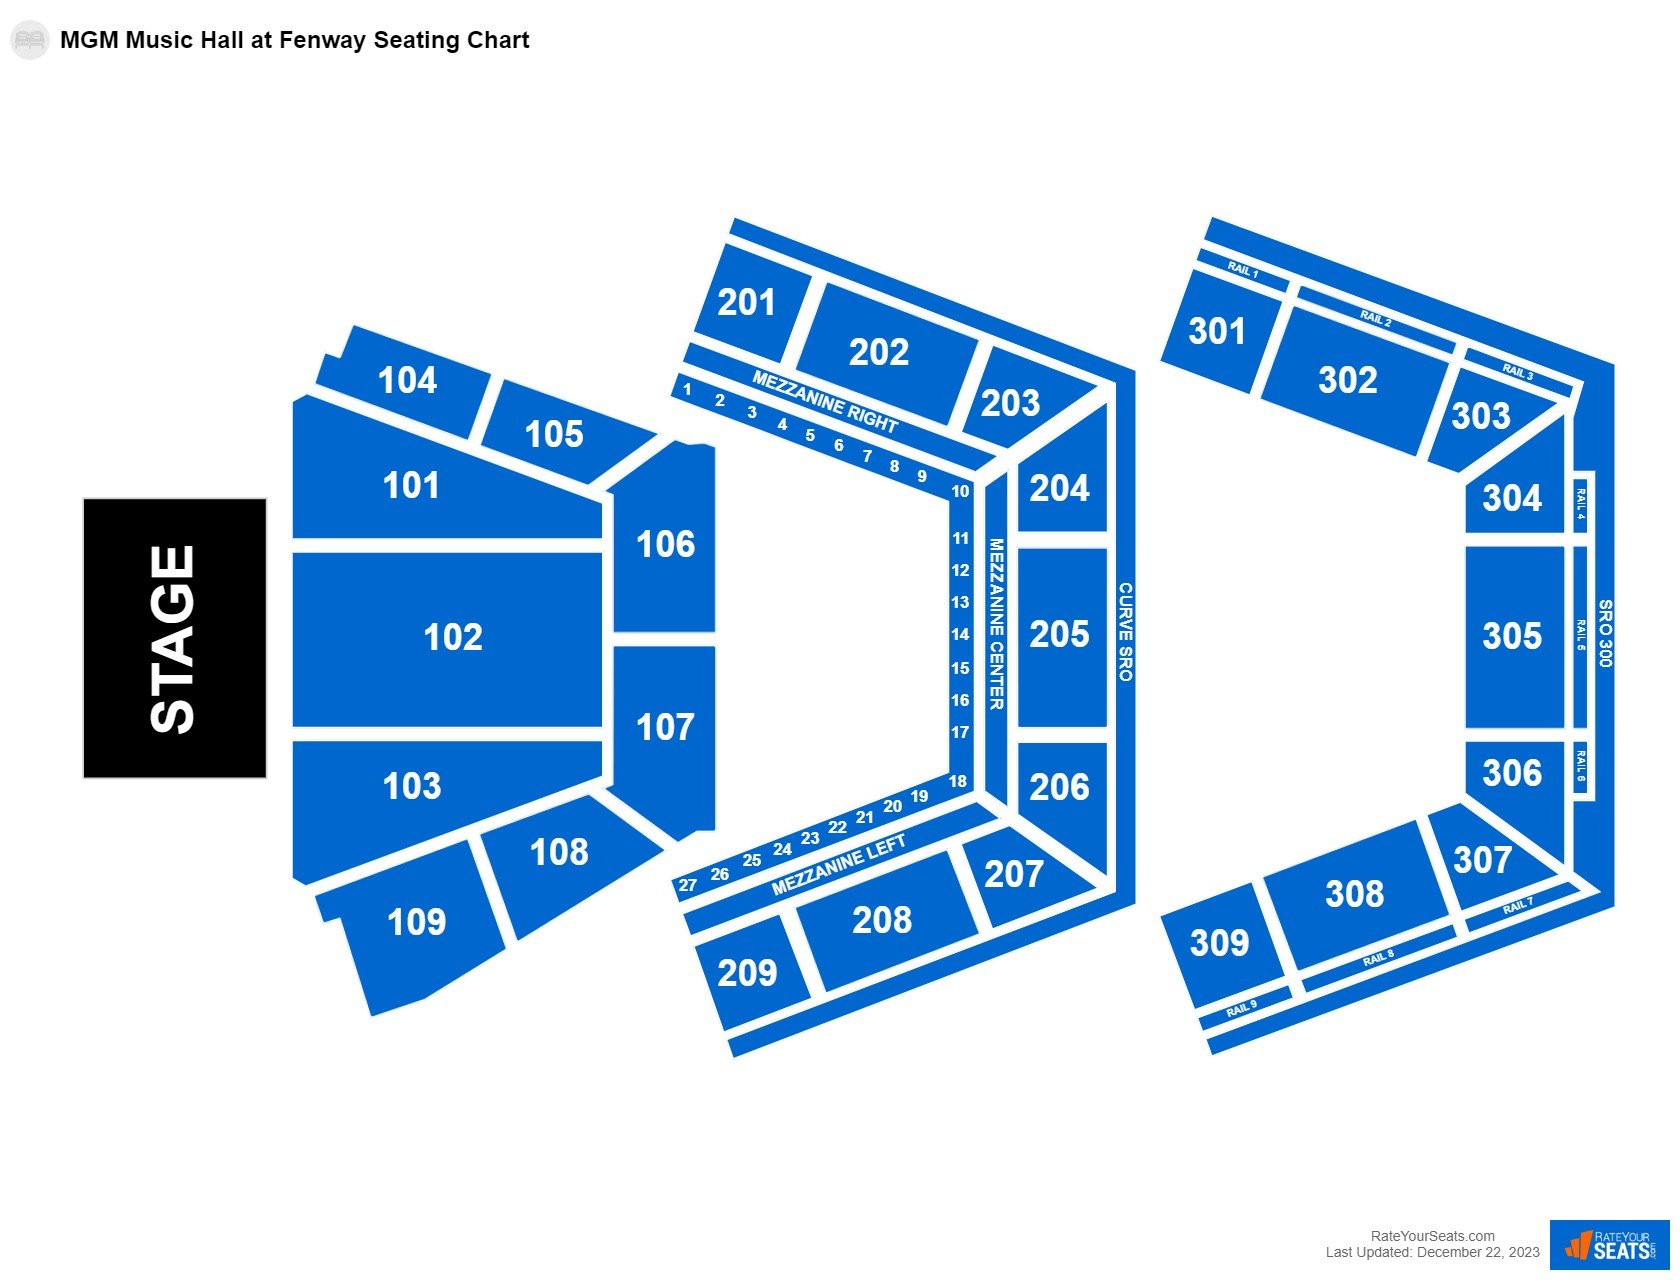 Concert seating chart at MGM Music Hall at Fenway